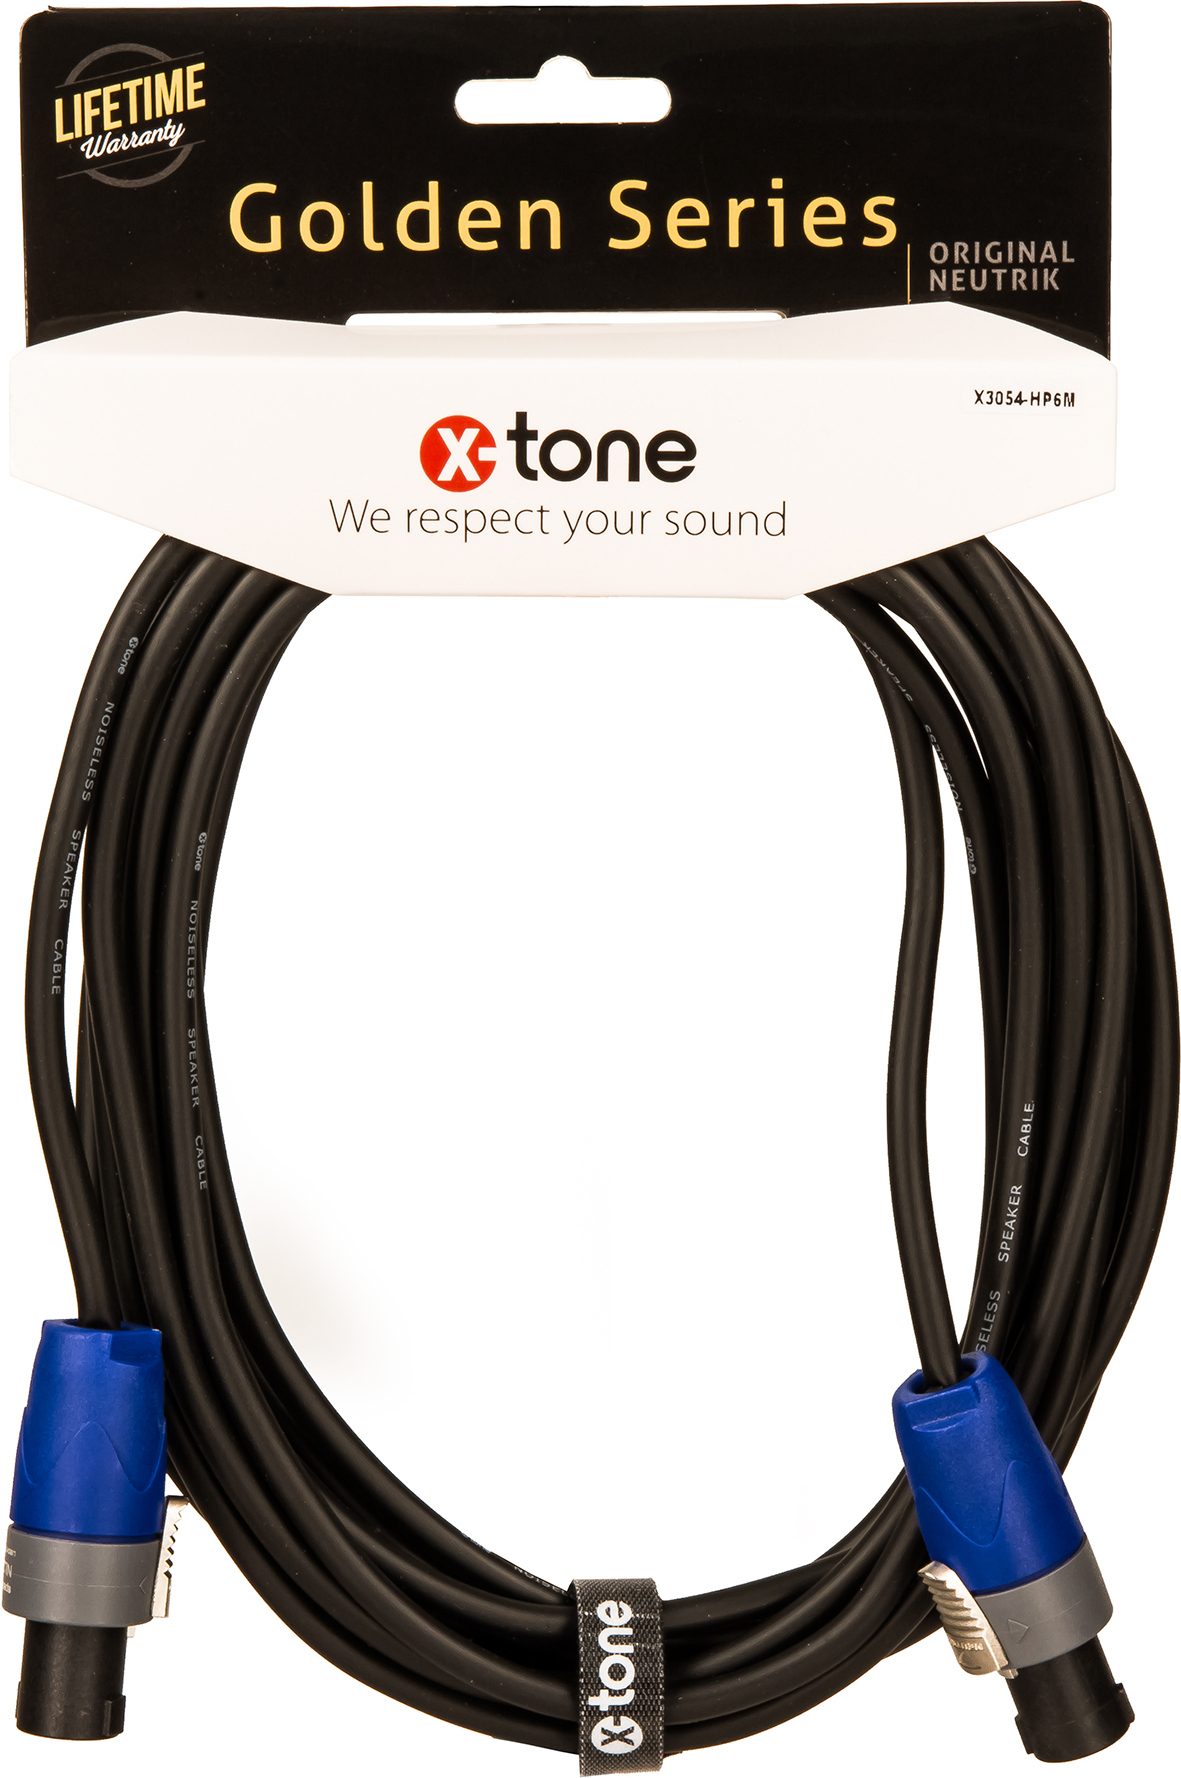 X-tone X3054-hp6m Speaker Cable Golden Series Neutrik Speakon 6m - Cable - Main picture